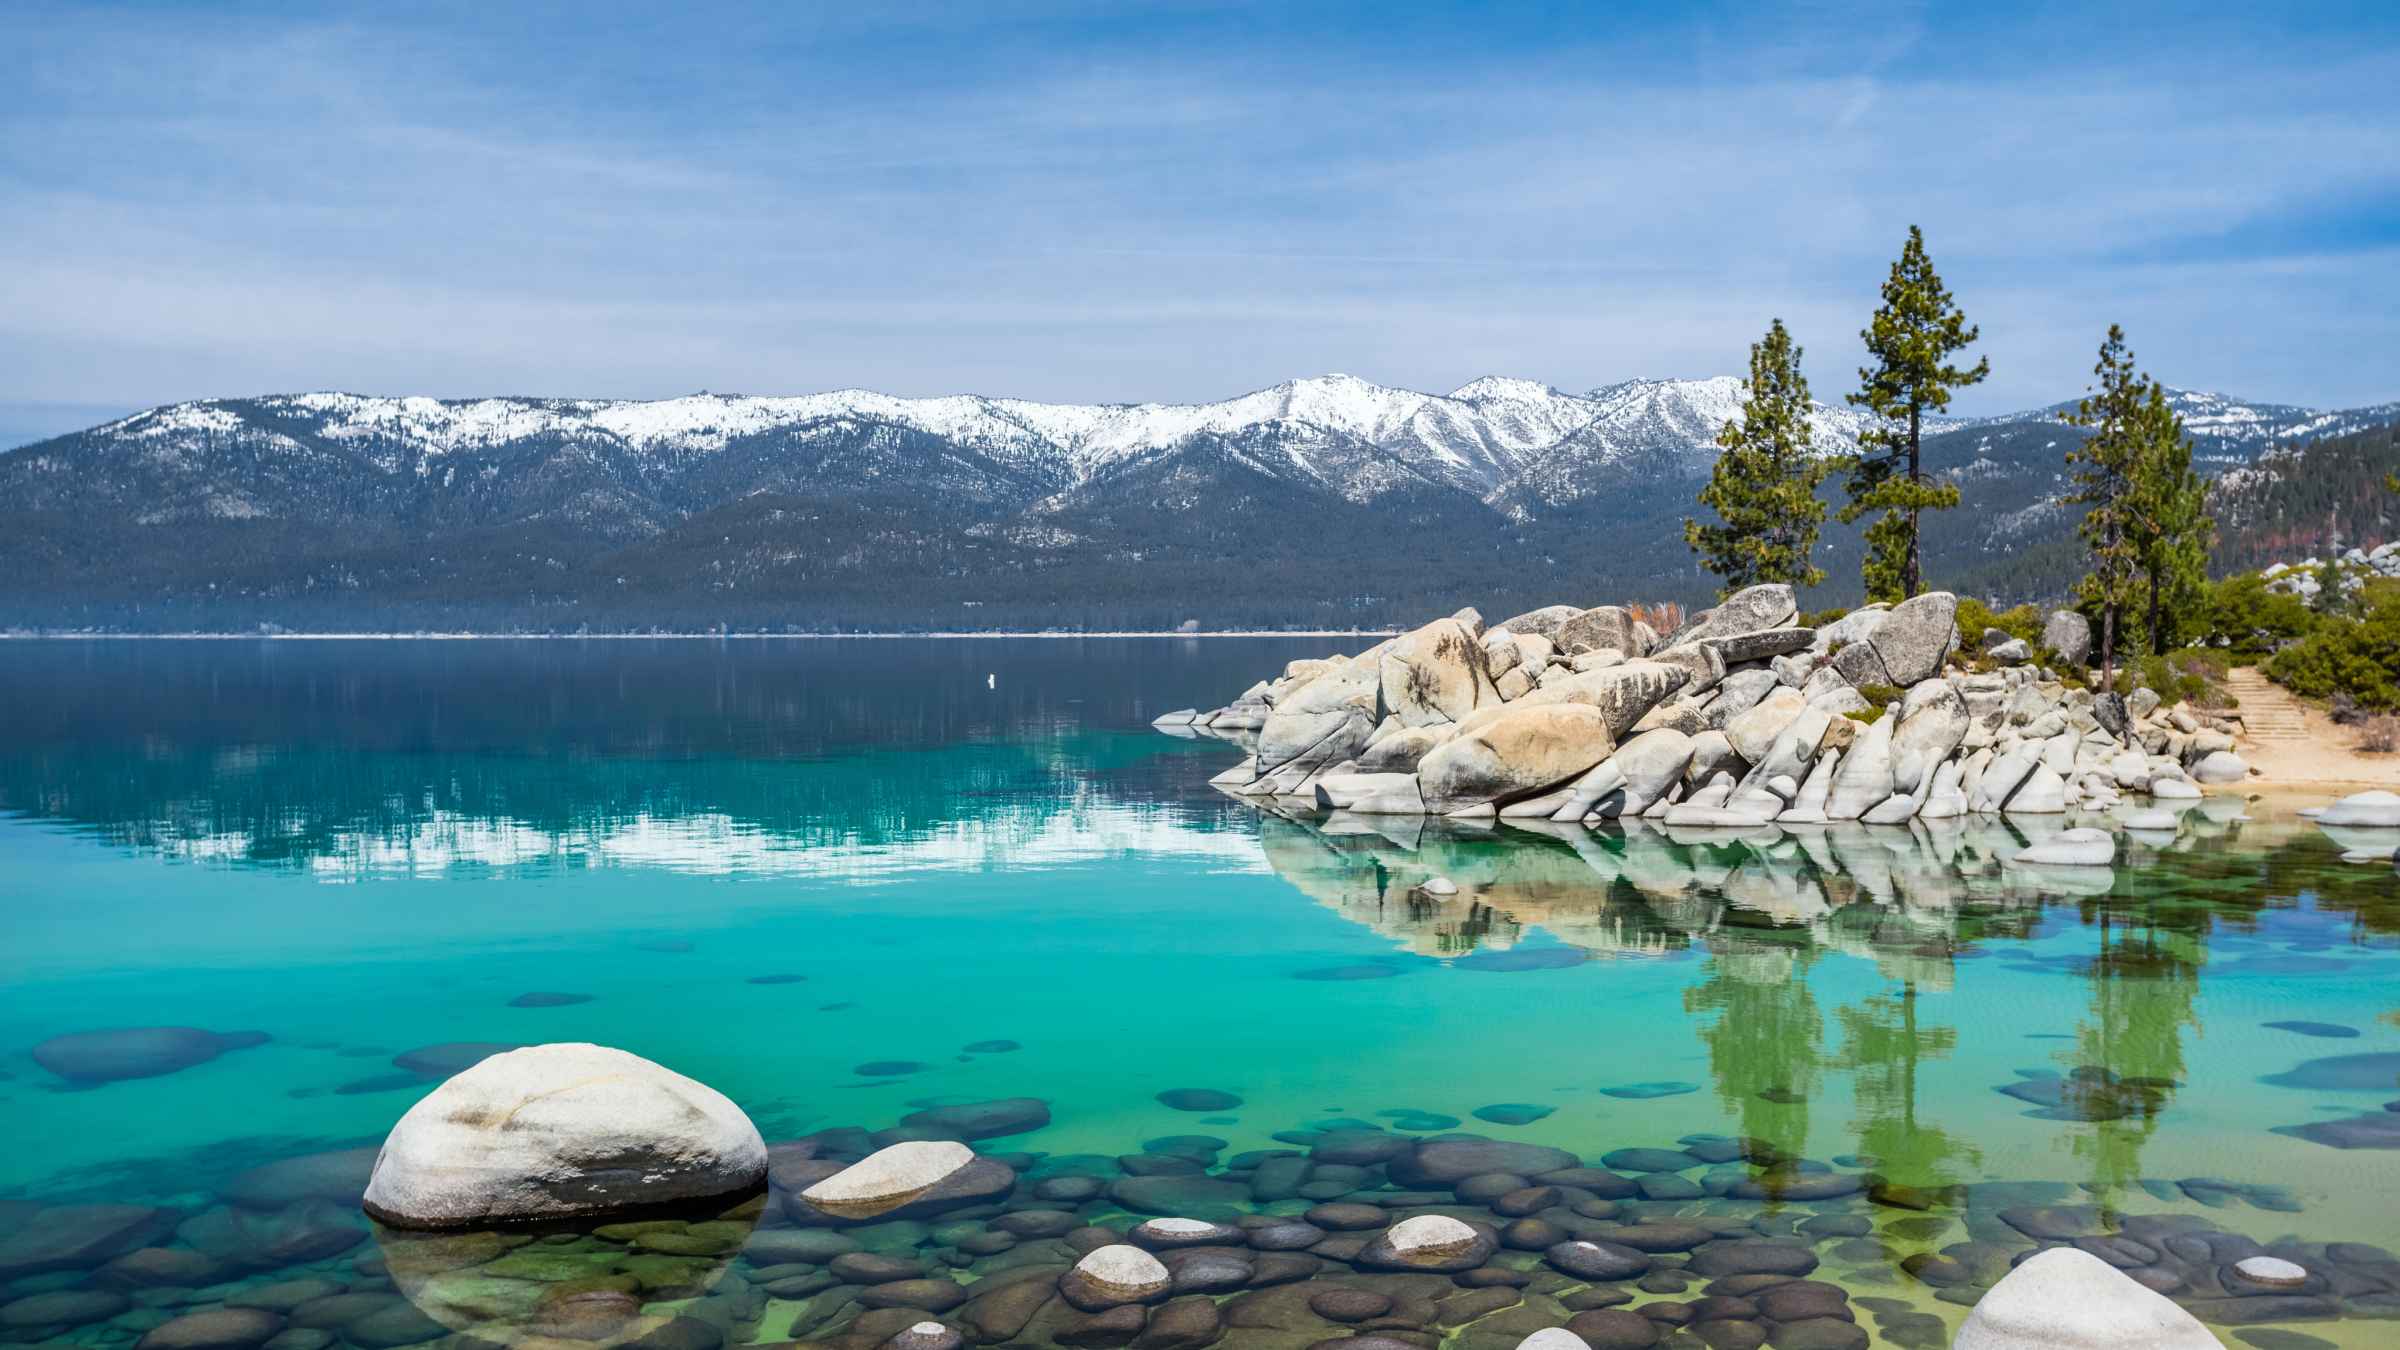 Lake Tahoe Kalifornien Boka biljetter till ditt besök GetYourGuide